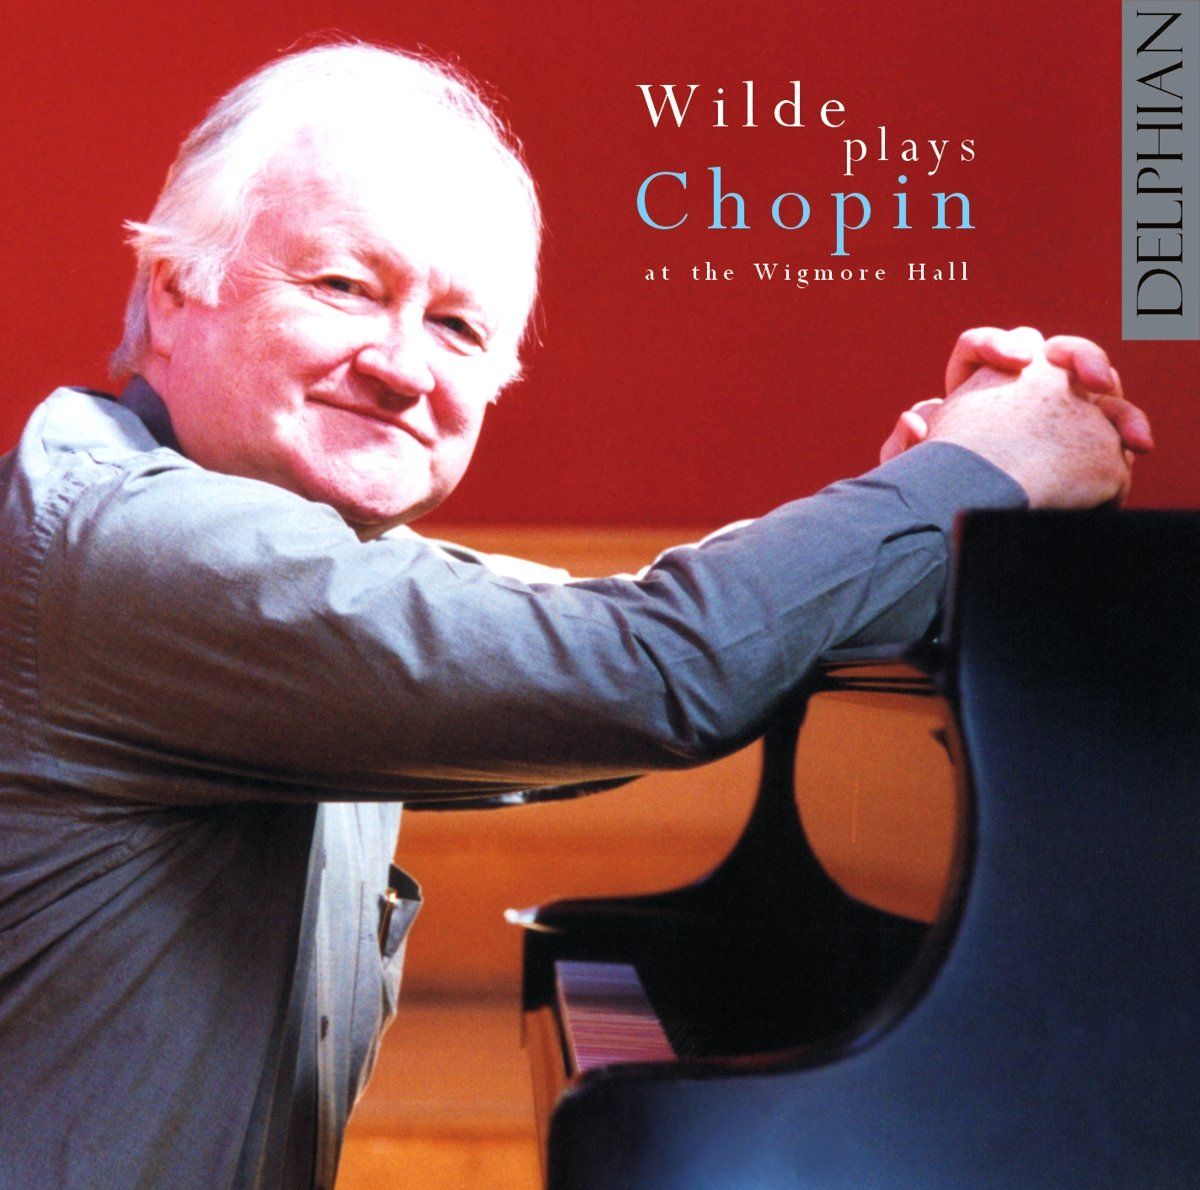 Wilde plays Chopin at the Wigmore Hall CD Delphian Records